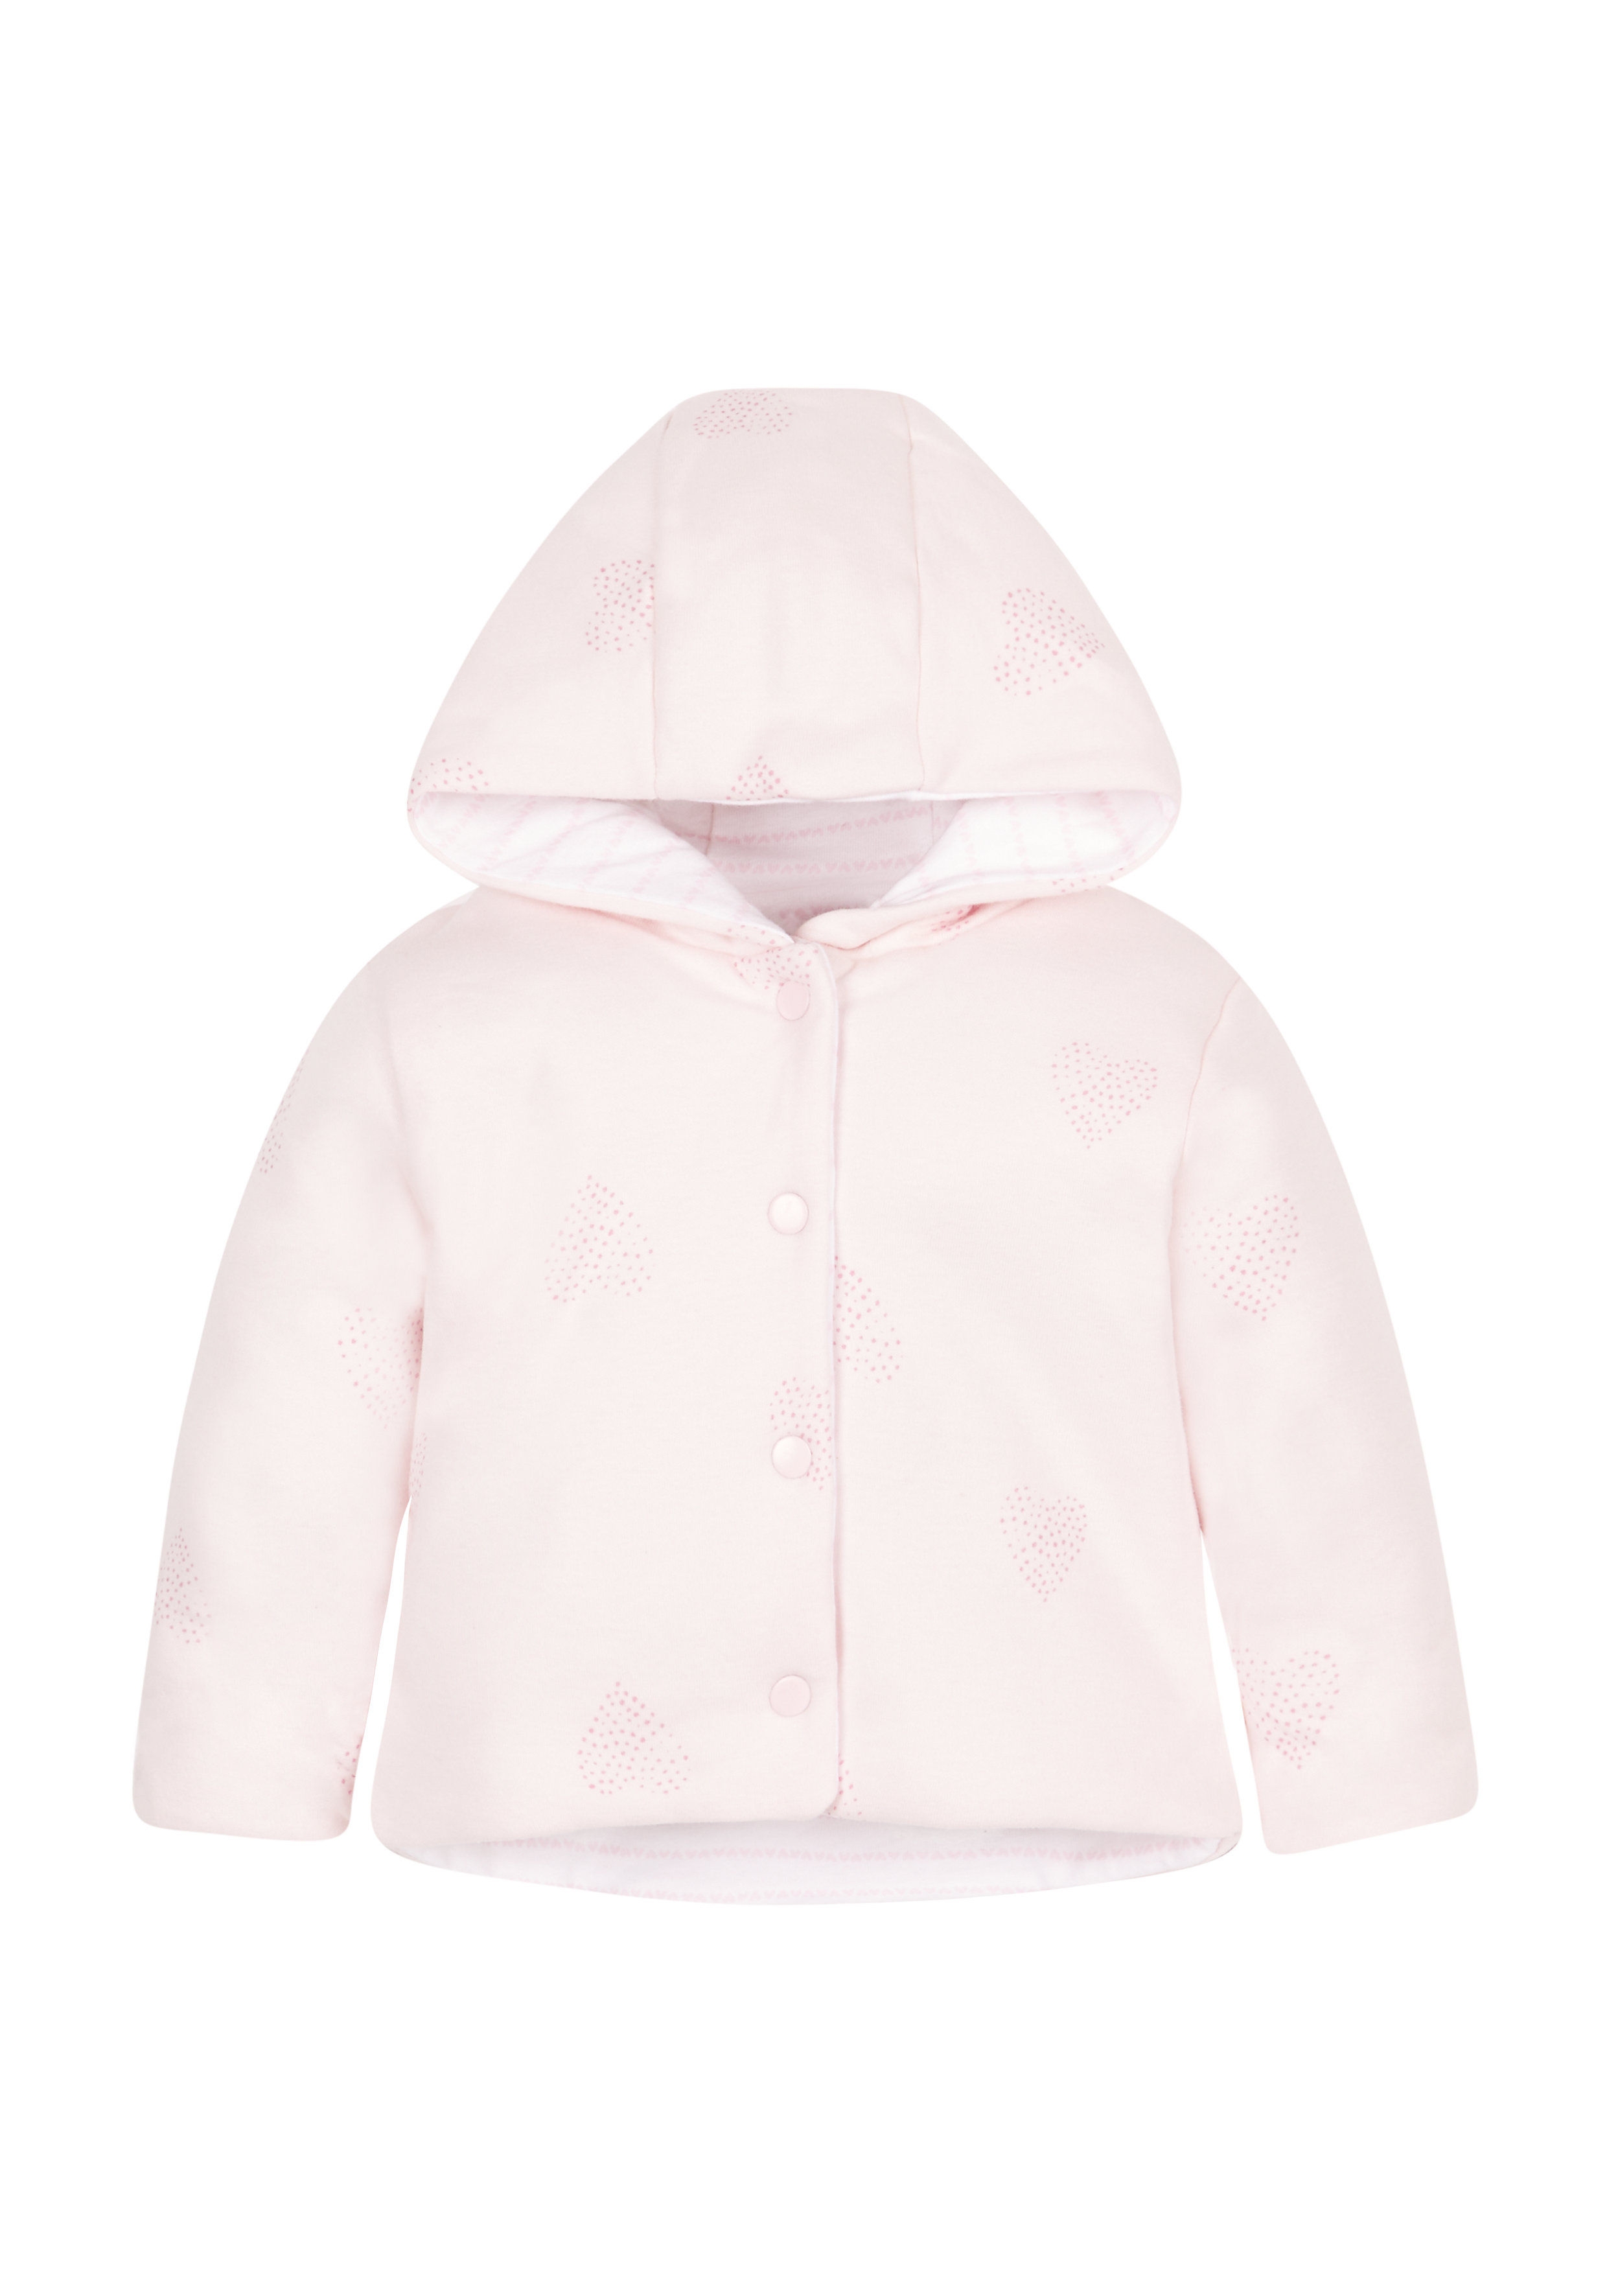 Mothercare | Girls Full Sleeves Jacket Heart Print - Pink